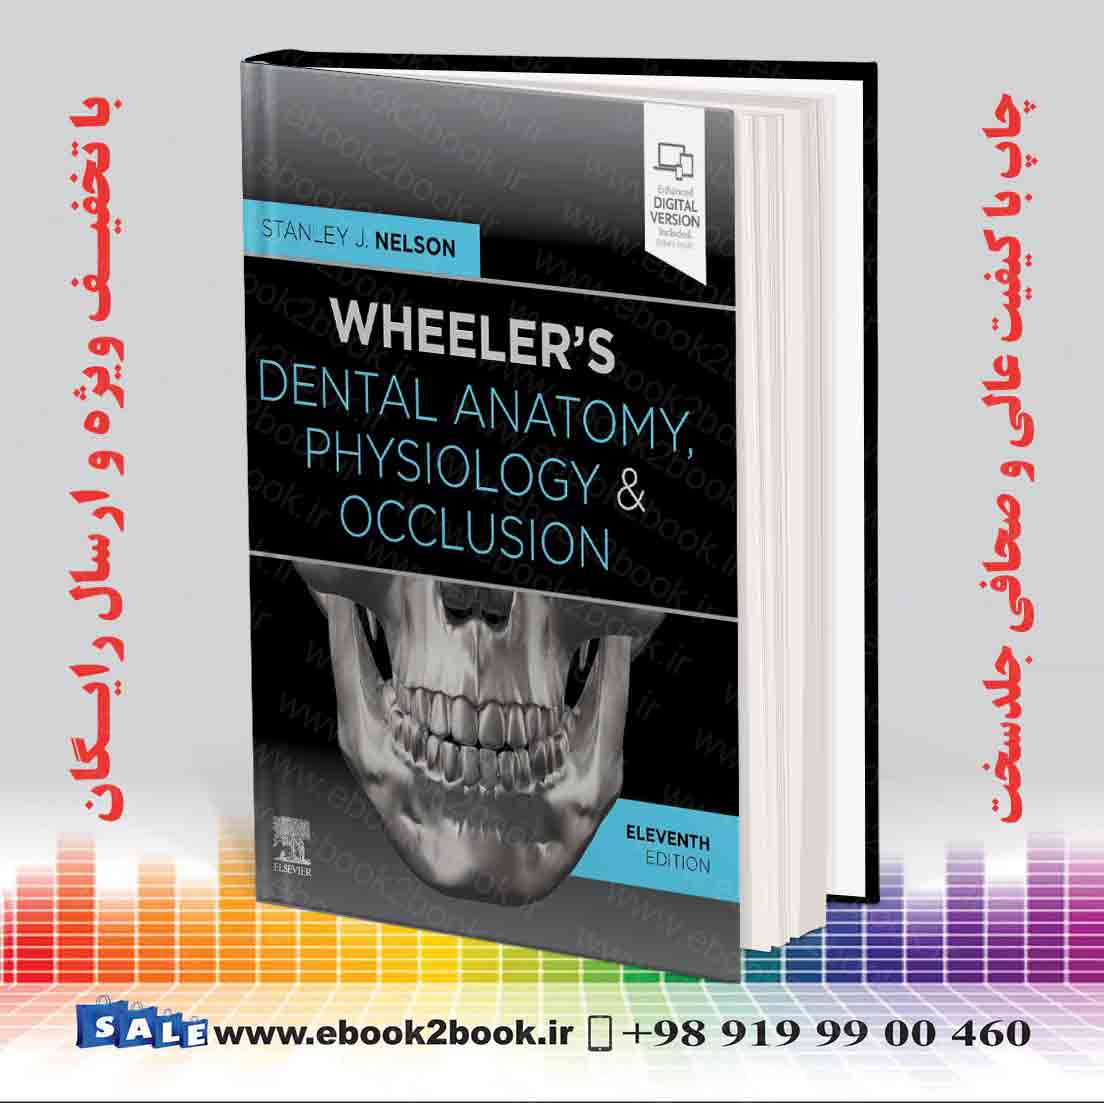 Physiology　Edition　خرید　Dental　کتاب　کتاب　بوک　and　Anatomy,　11th　Wheeler's　ایبوک　تو　Occlusion　فروشگاه